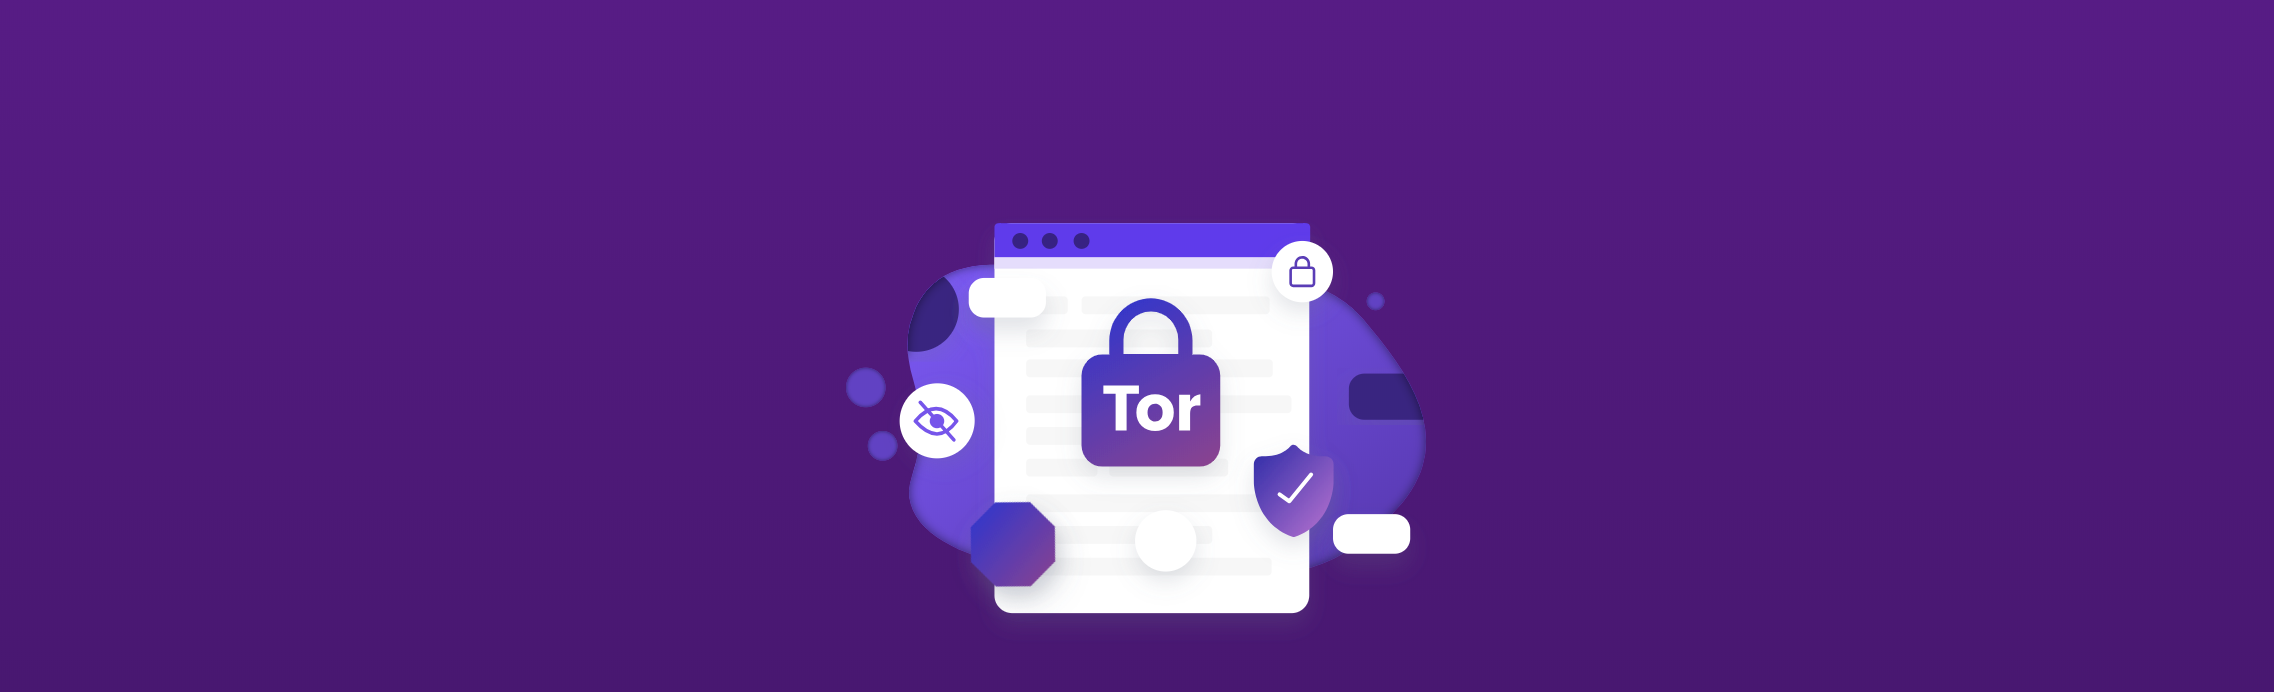 Tor browser with safari gidra tor browser установить flash player